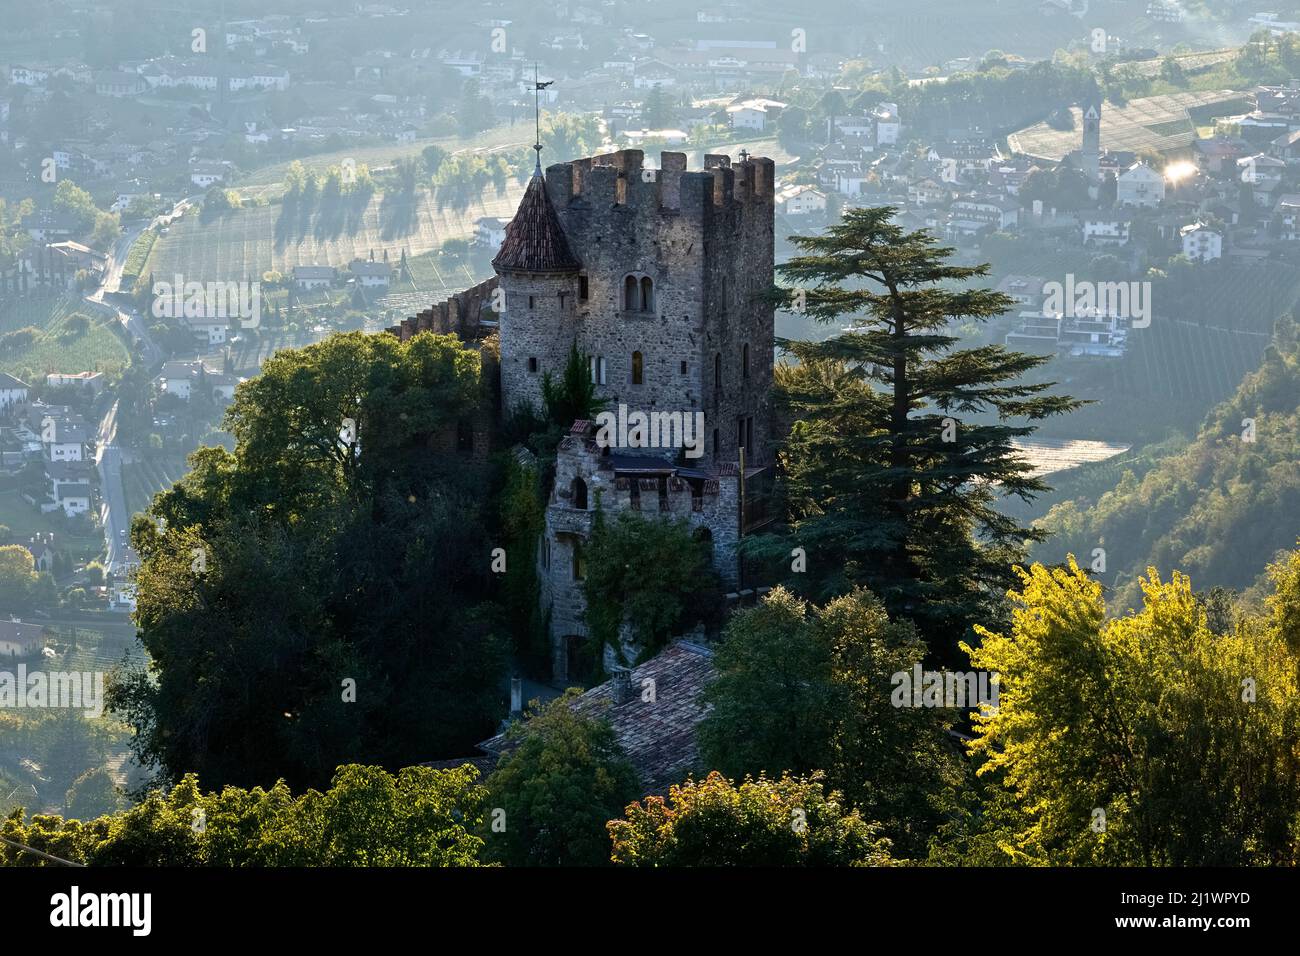 Castel Fontana/Brunnenburg has medieval origins but was rebuilt in neo-gothic style in the twentieth century. Tirol/Tirolo, Alto adige, Italy. Stock Photo